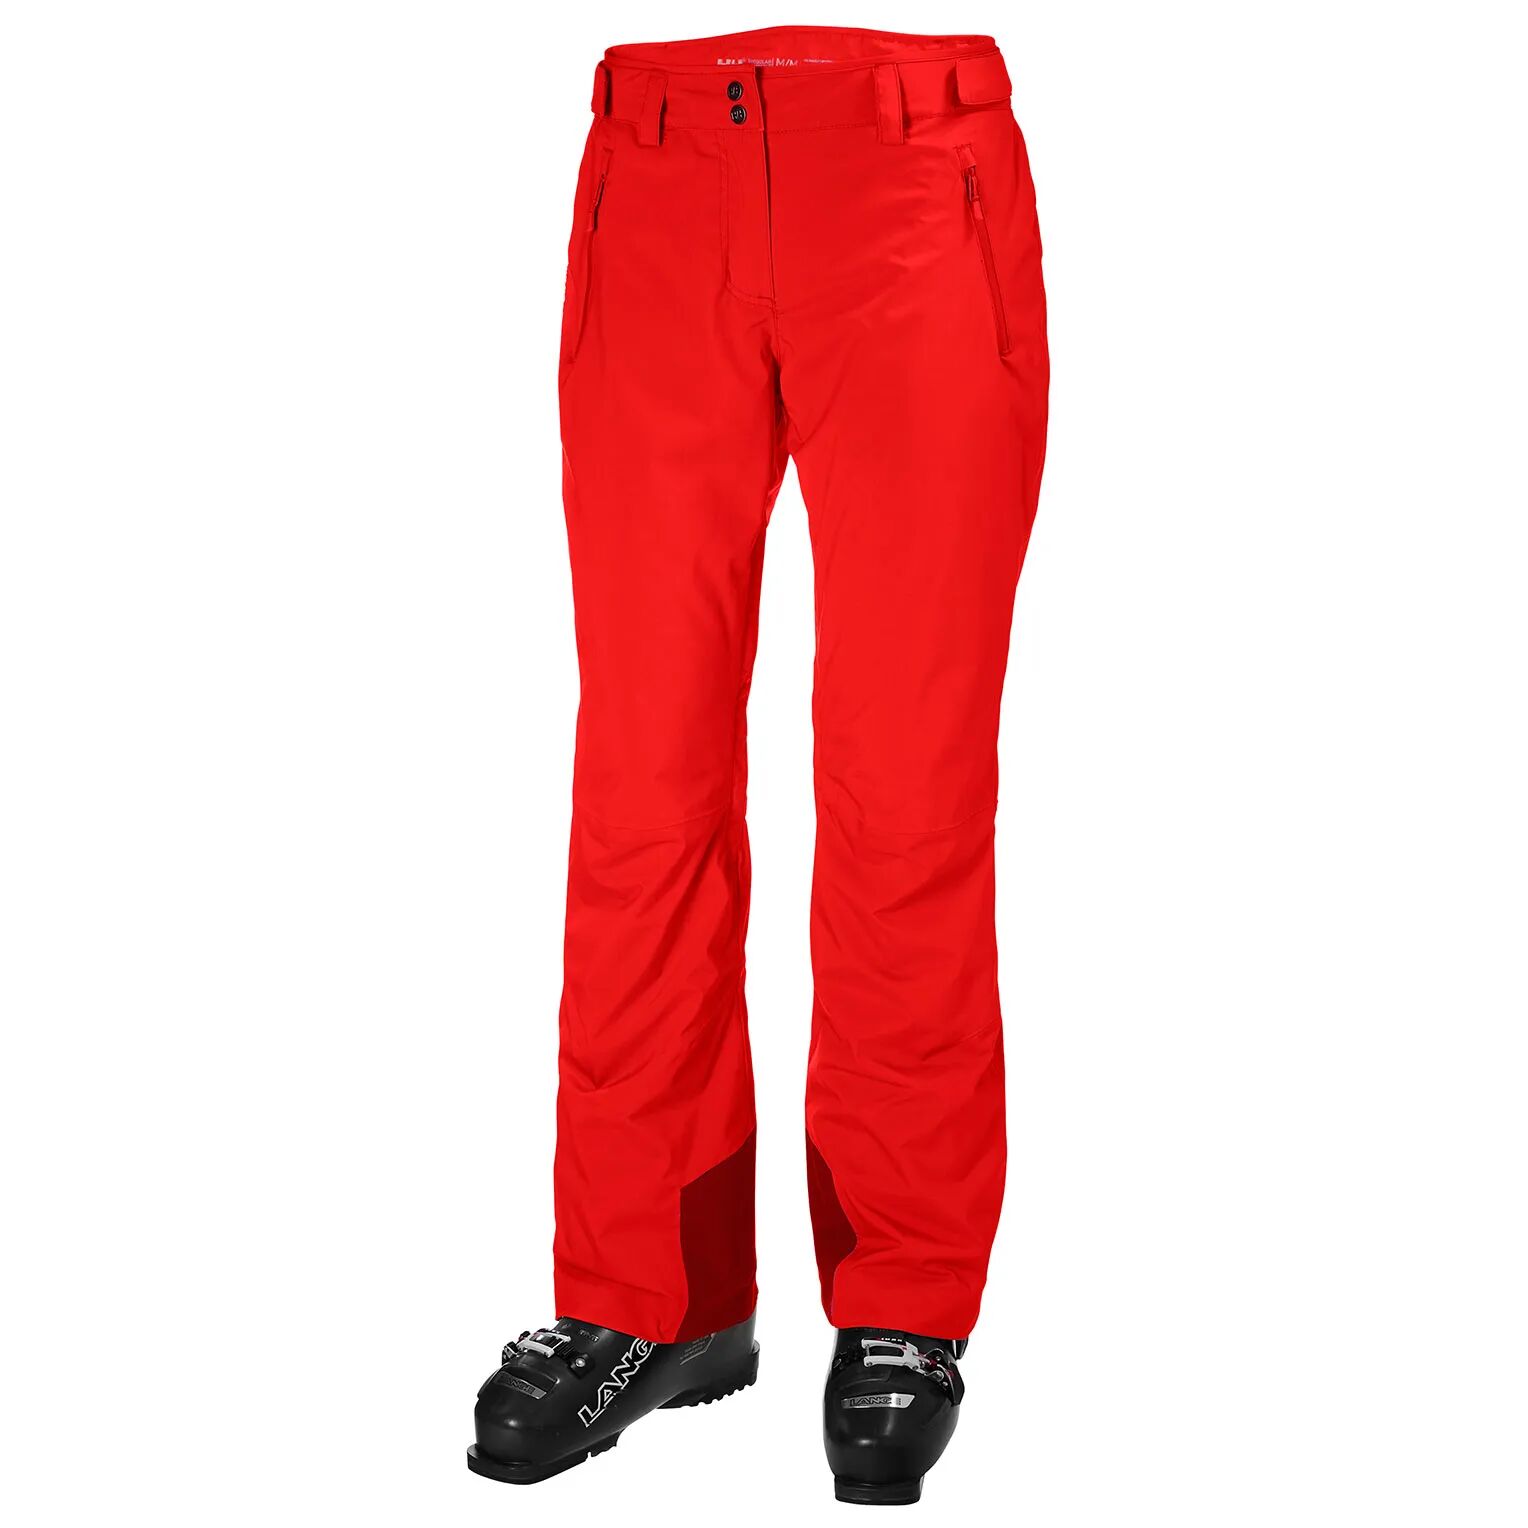 Helly Hansen mujeres pantalon de esqui rojo XS